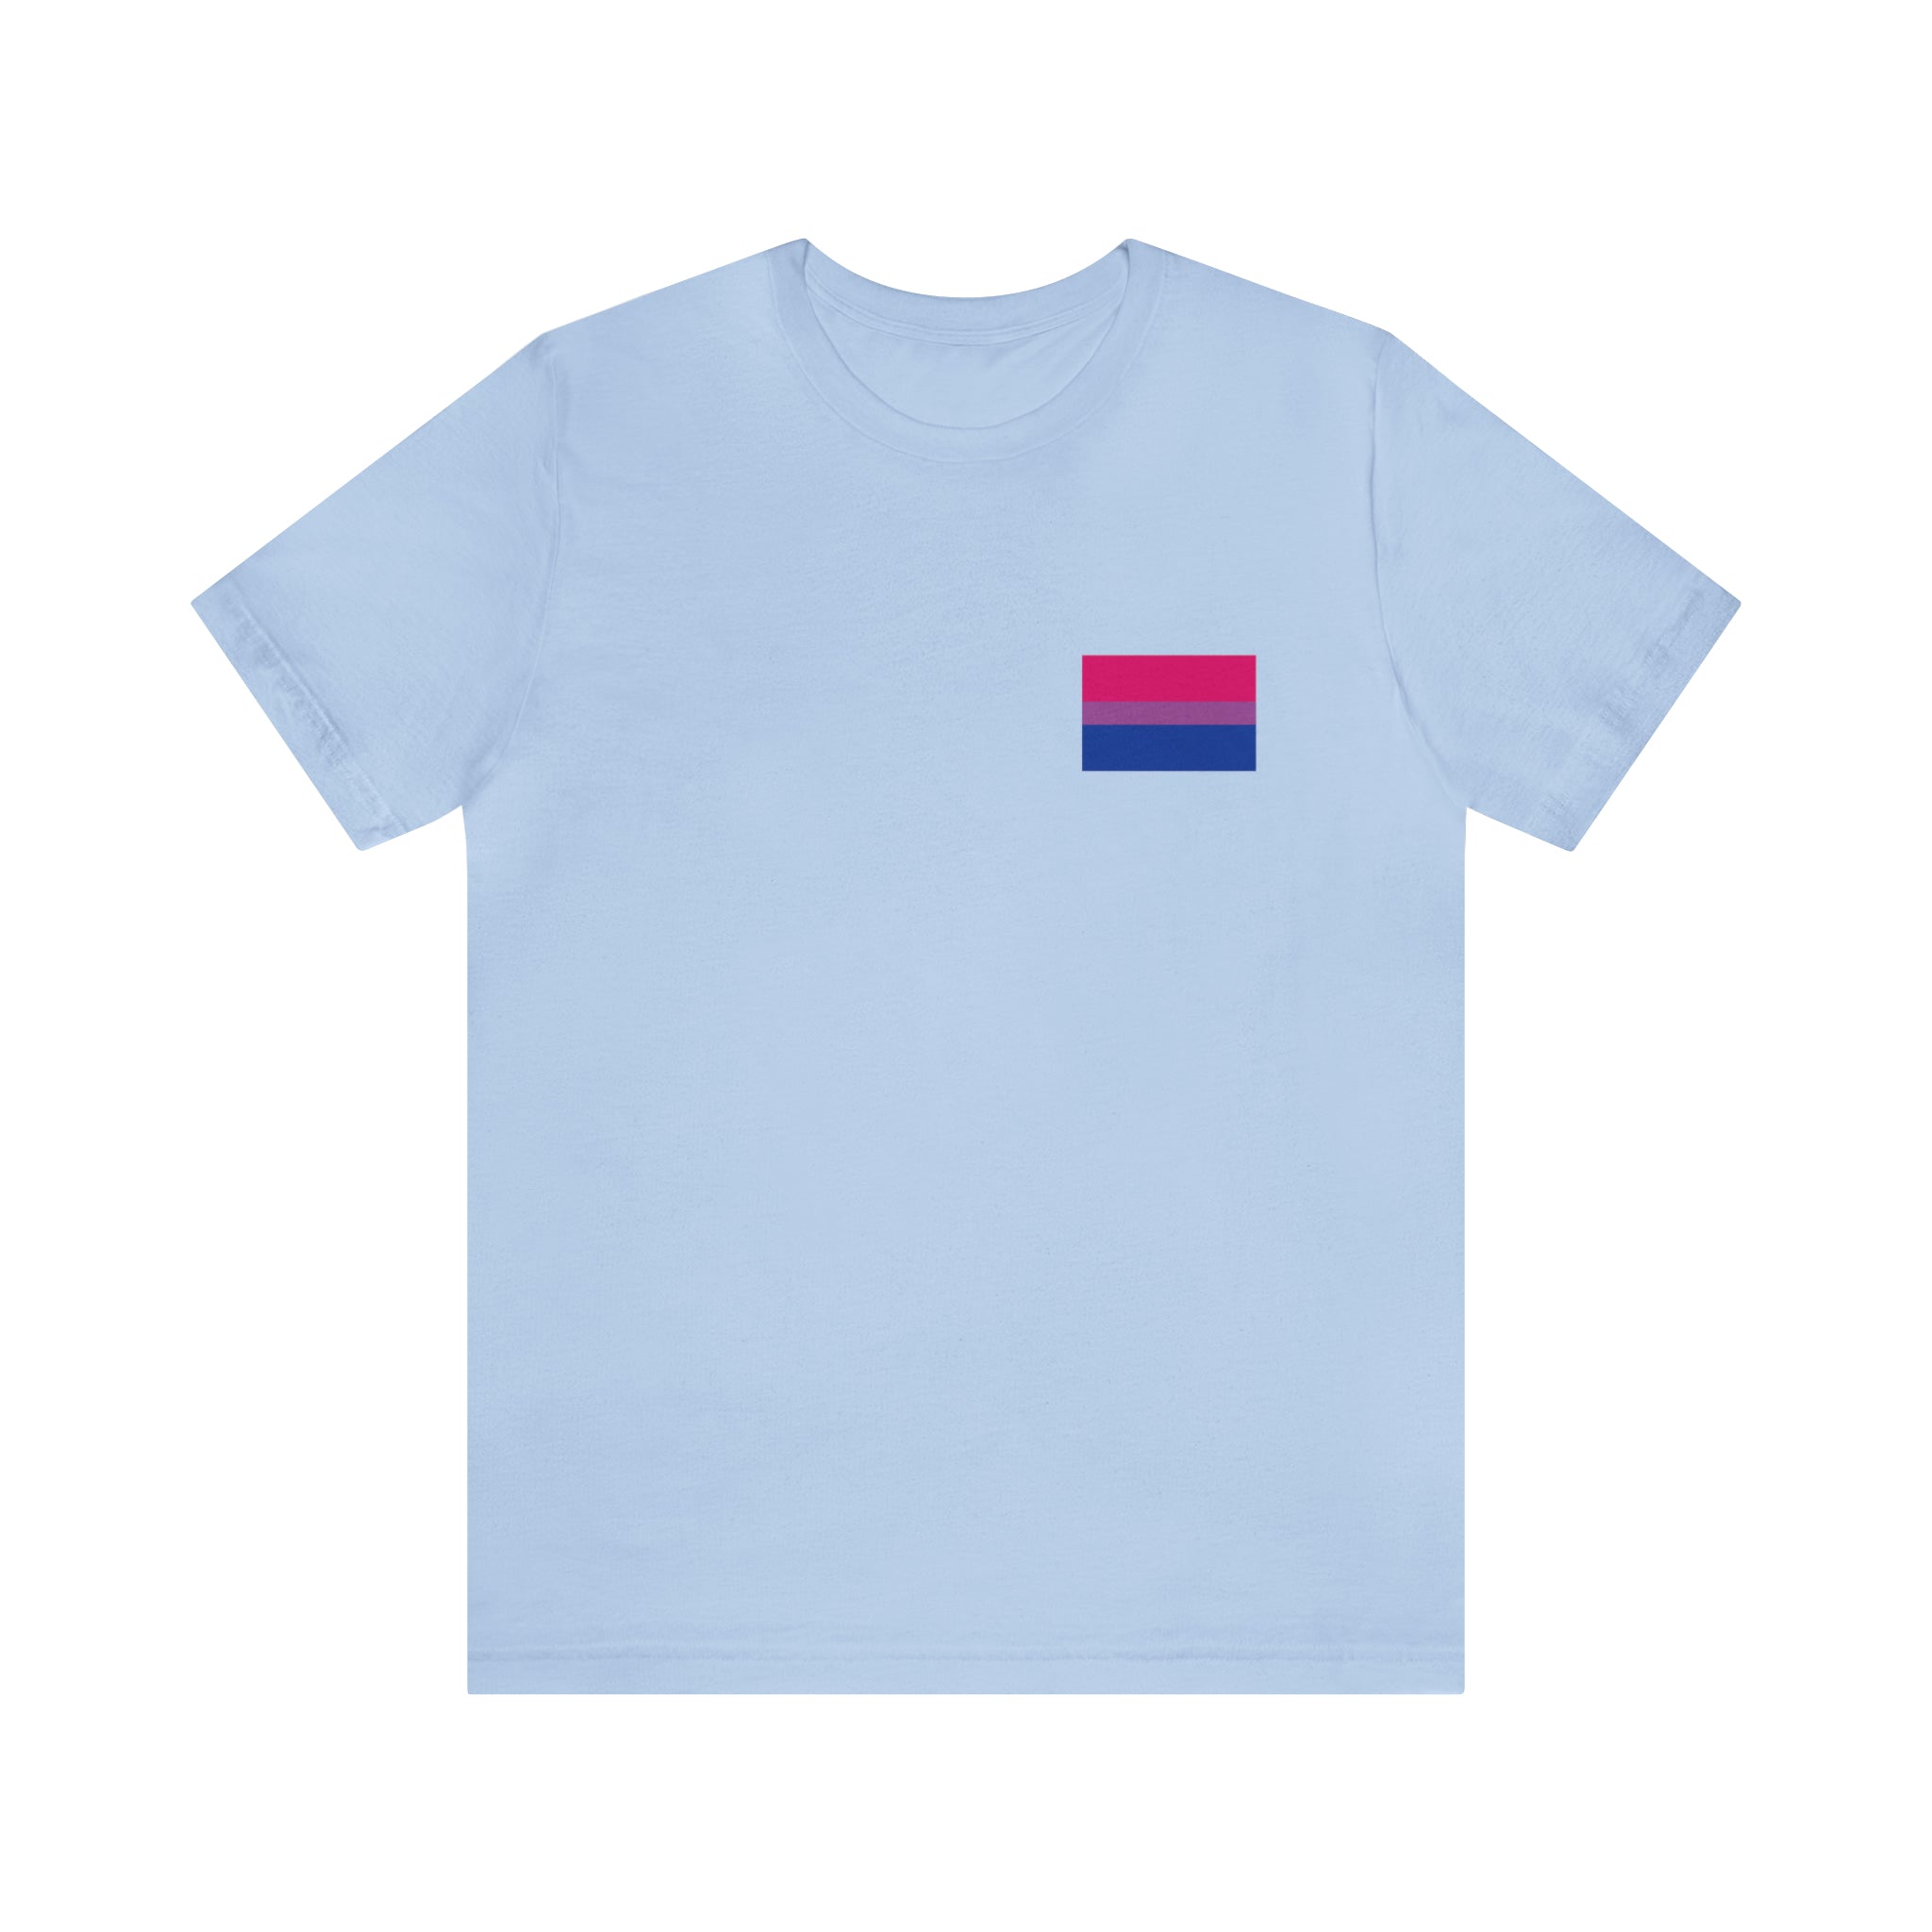 Bisexual Pride Flag : Unisex 100% Comfy Cotton T-Shirt by Bella+Canvas